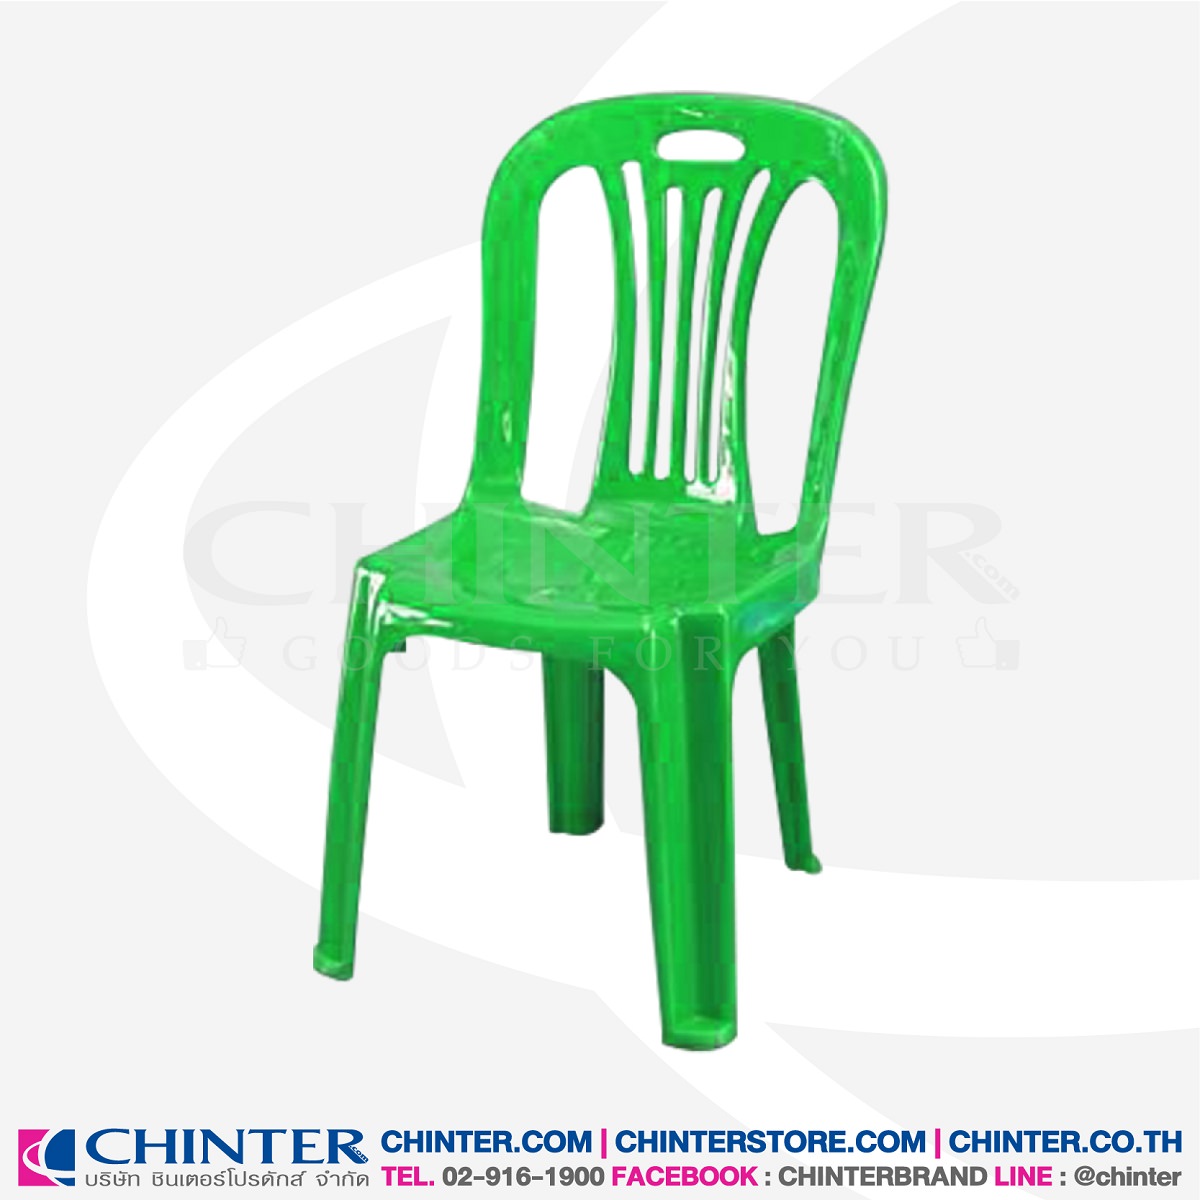 U-0020 เก้าอี้พลาสติก ขนาด 315x330x575x285 mm.